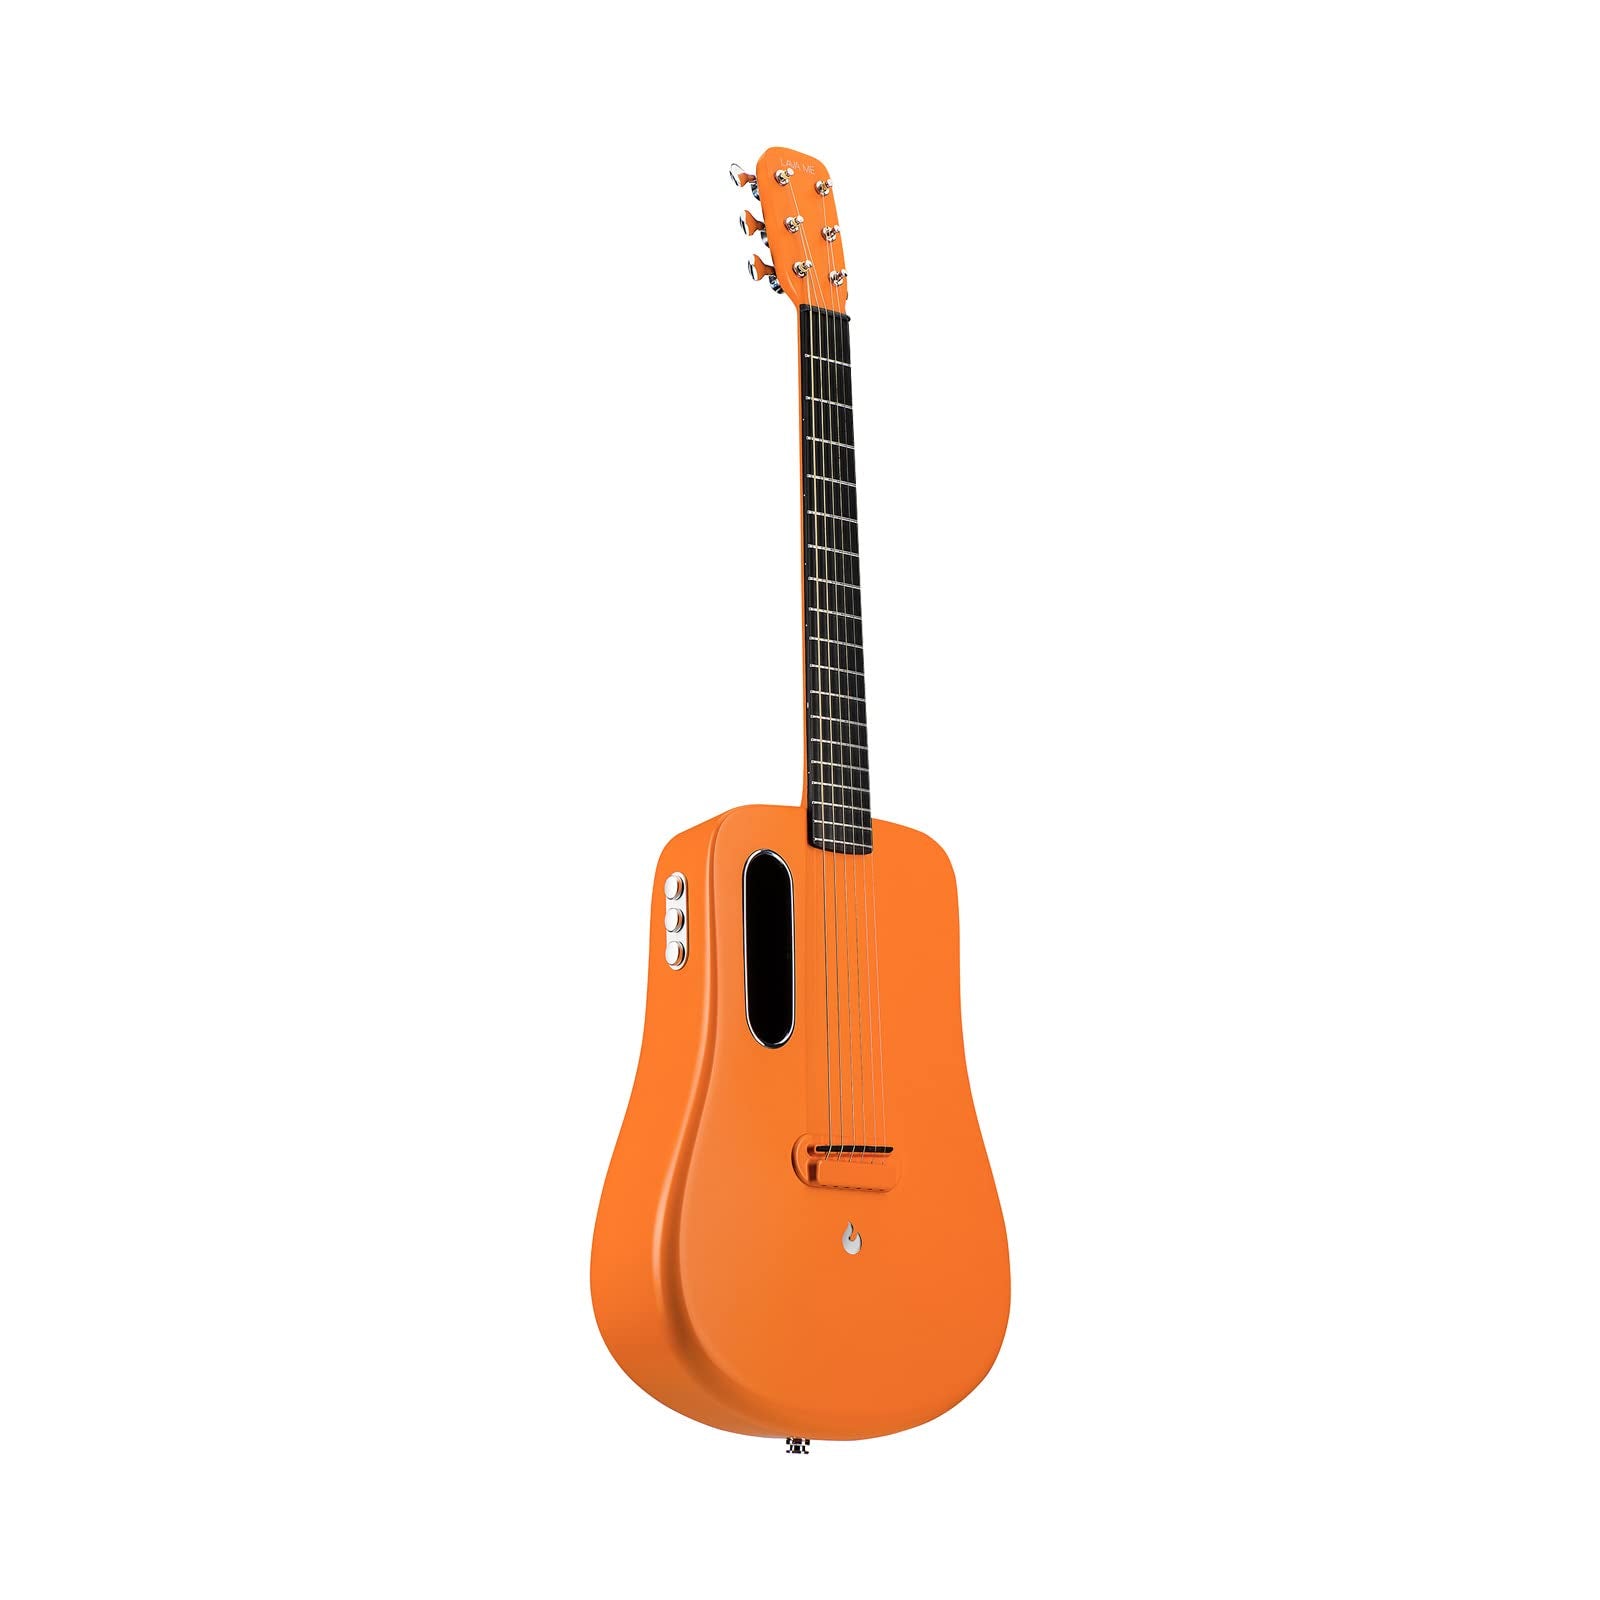 LAVA ME 2 FREEBOOST ORANGE, Acoustic Guitar for sale at Richards Guitars.